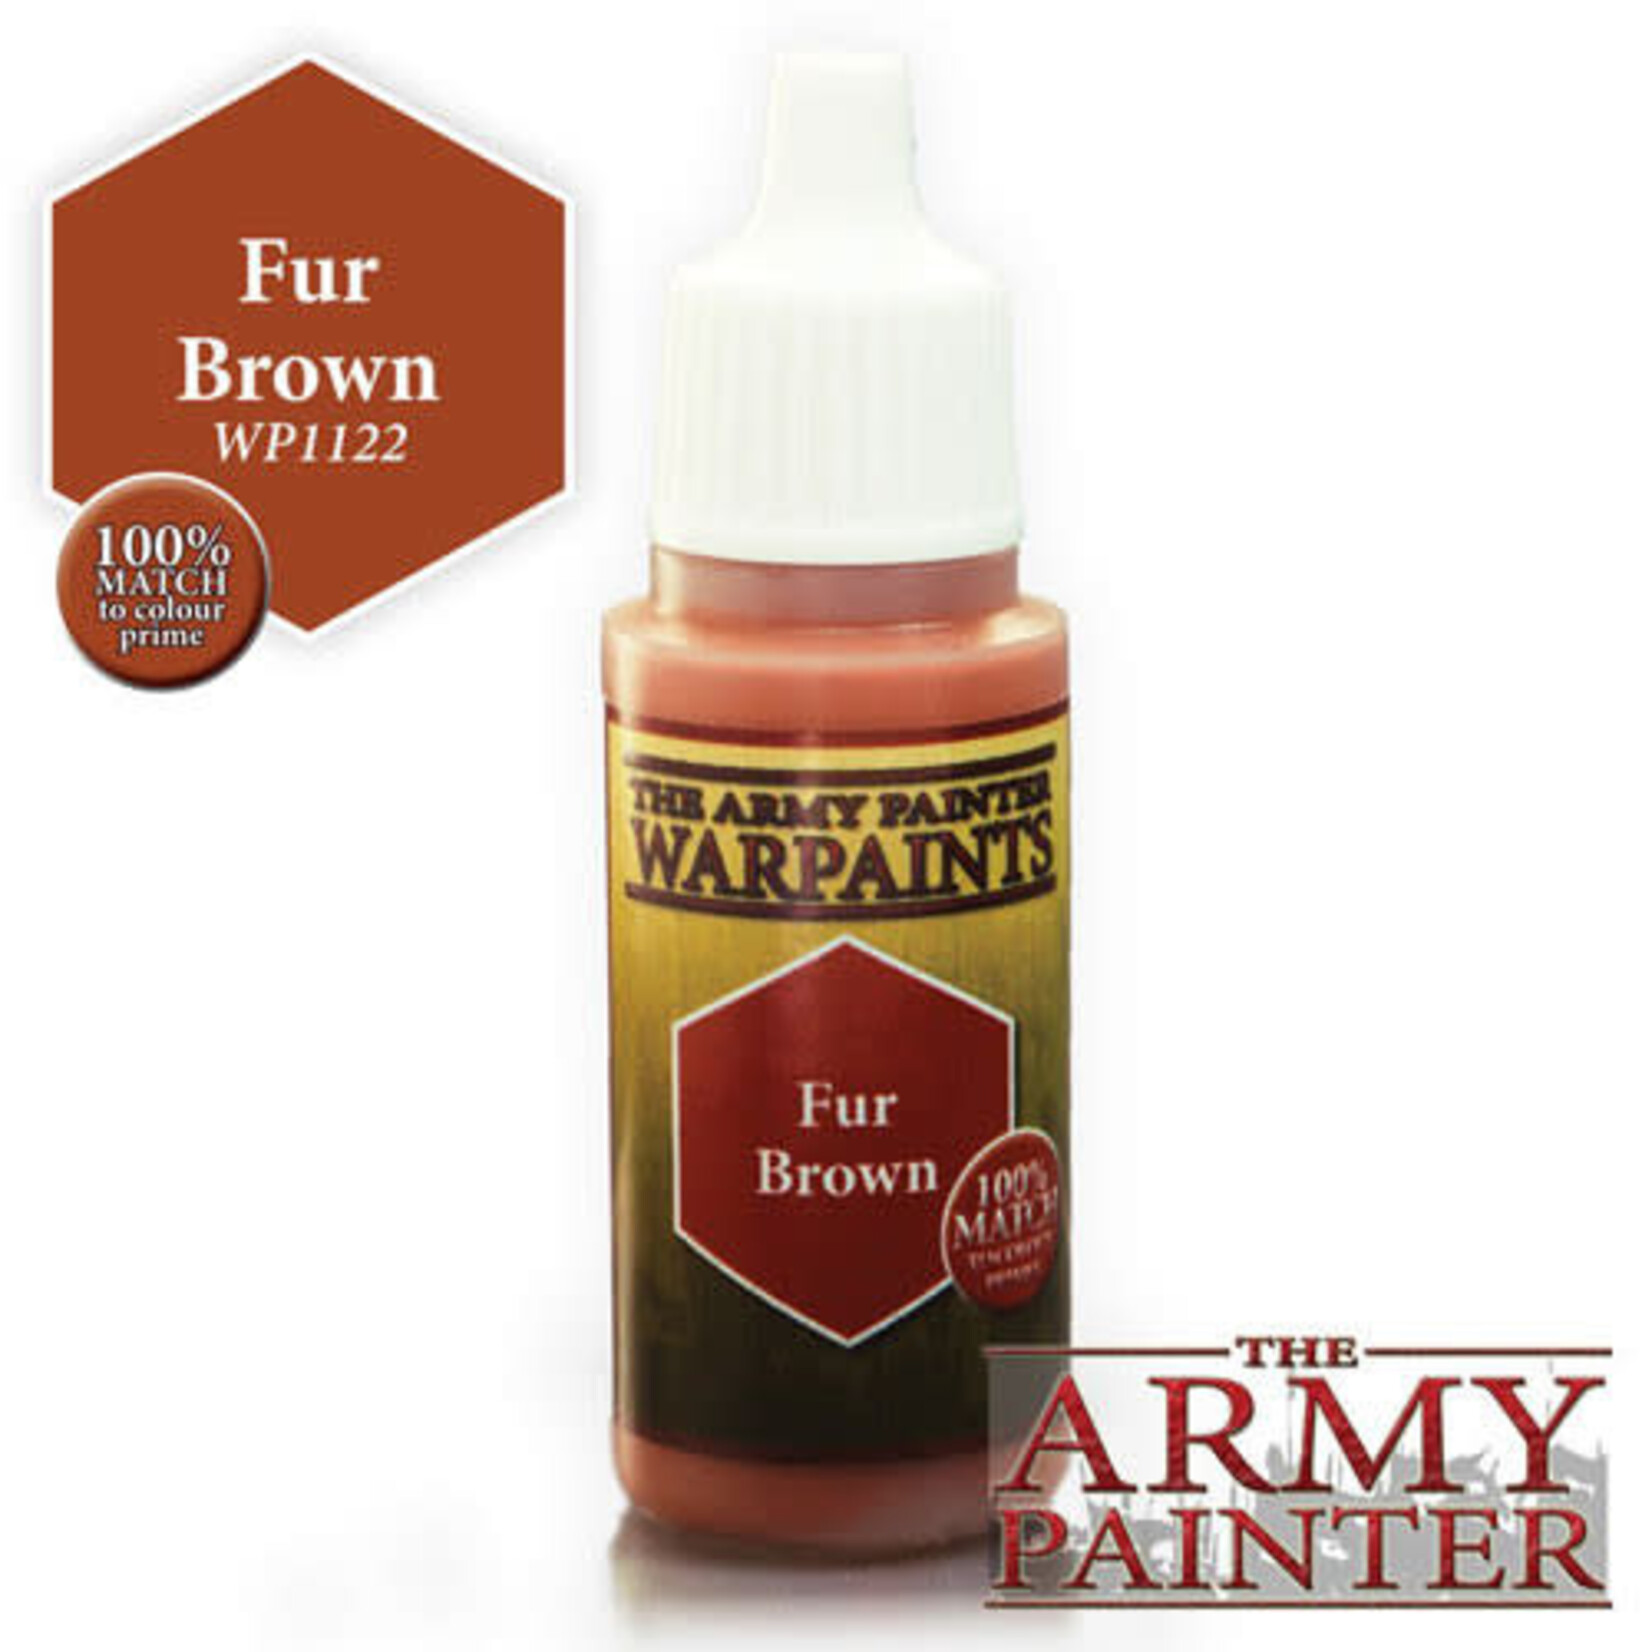 The Army Painter Warpaints: Fur Brown 18ml